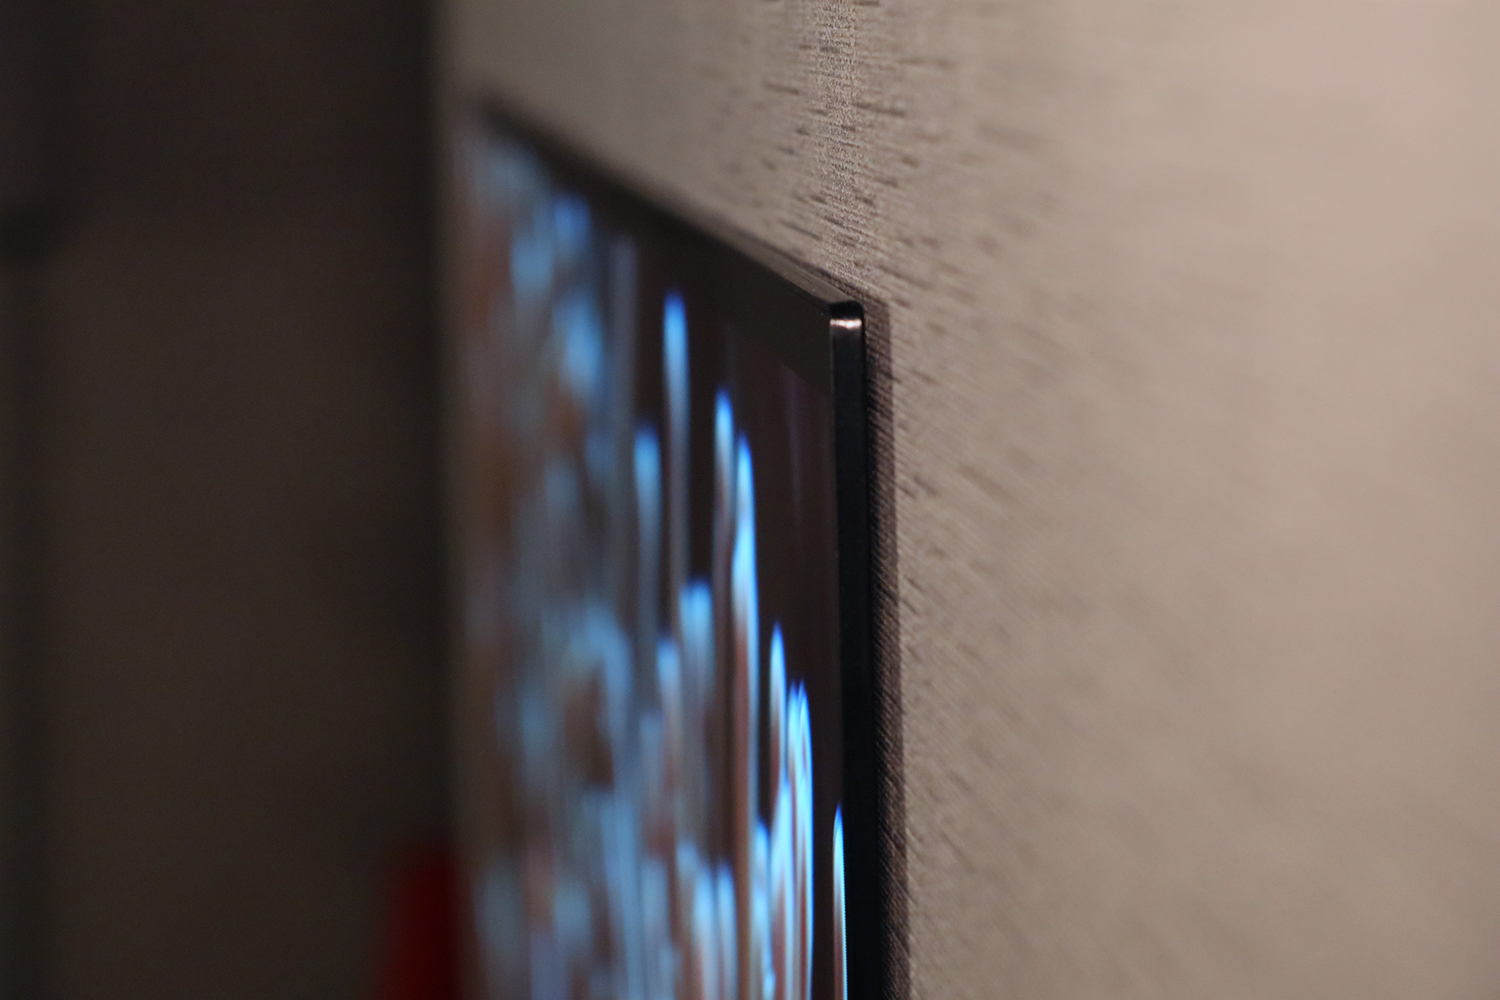 LG Signature OLED65W7P W7 Wallpaper OLED TV Review | Digital Trends